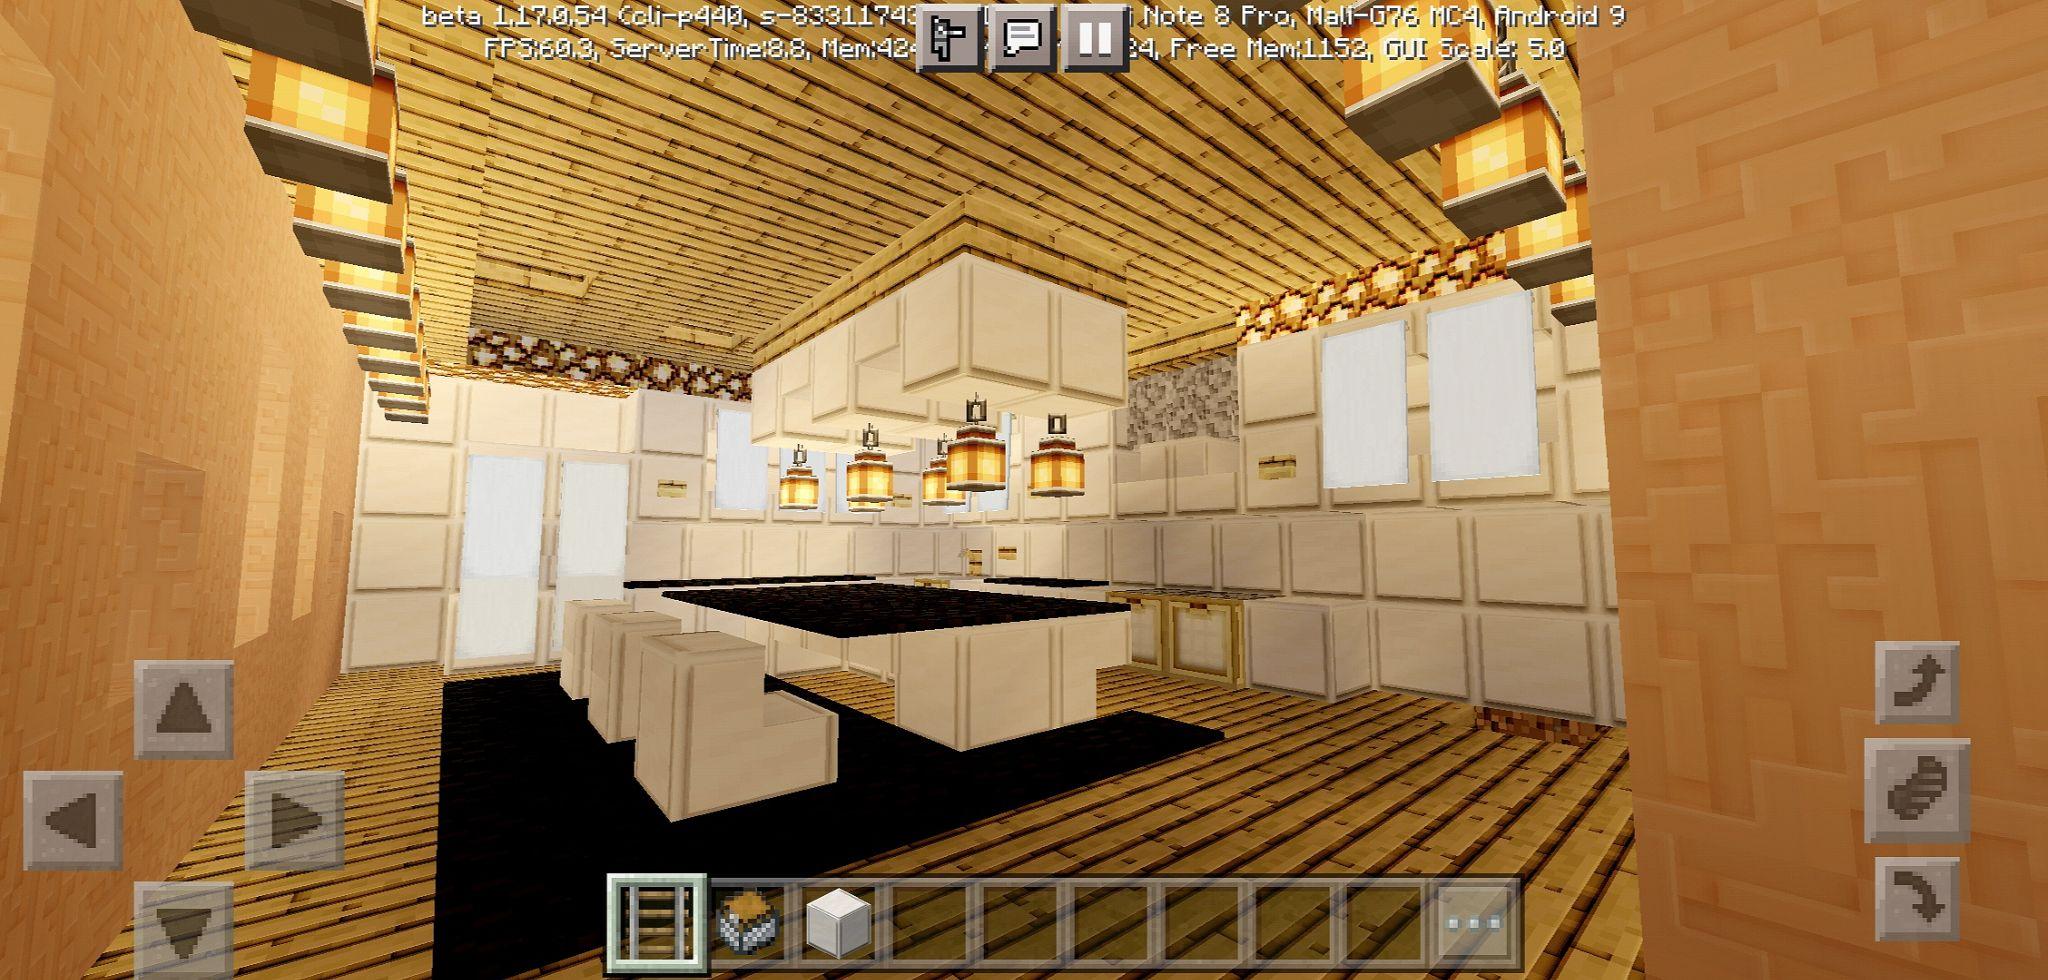 How to make a kitchen in Minecraft